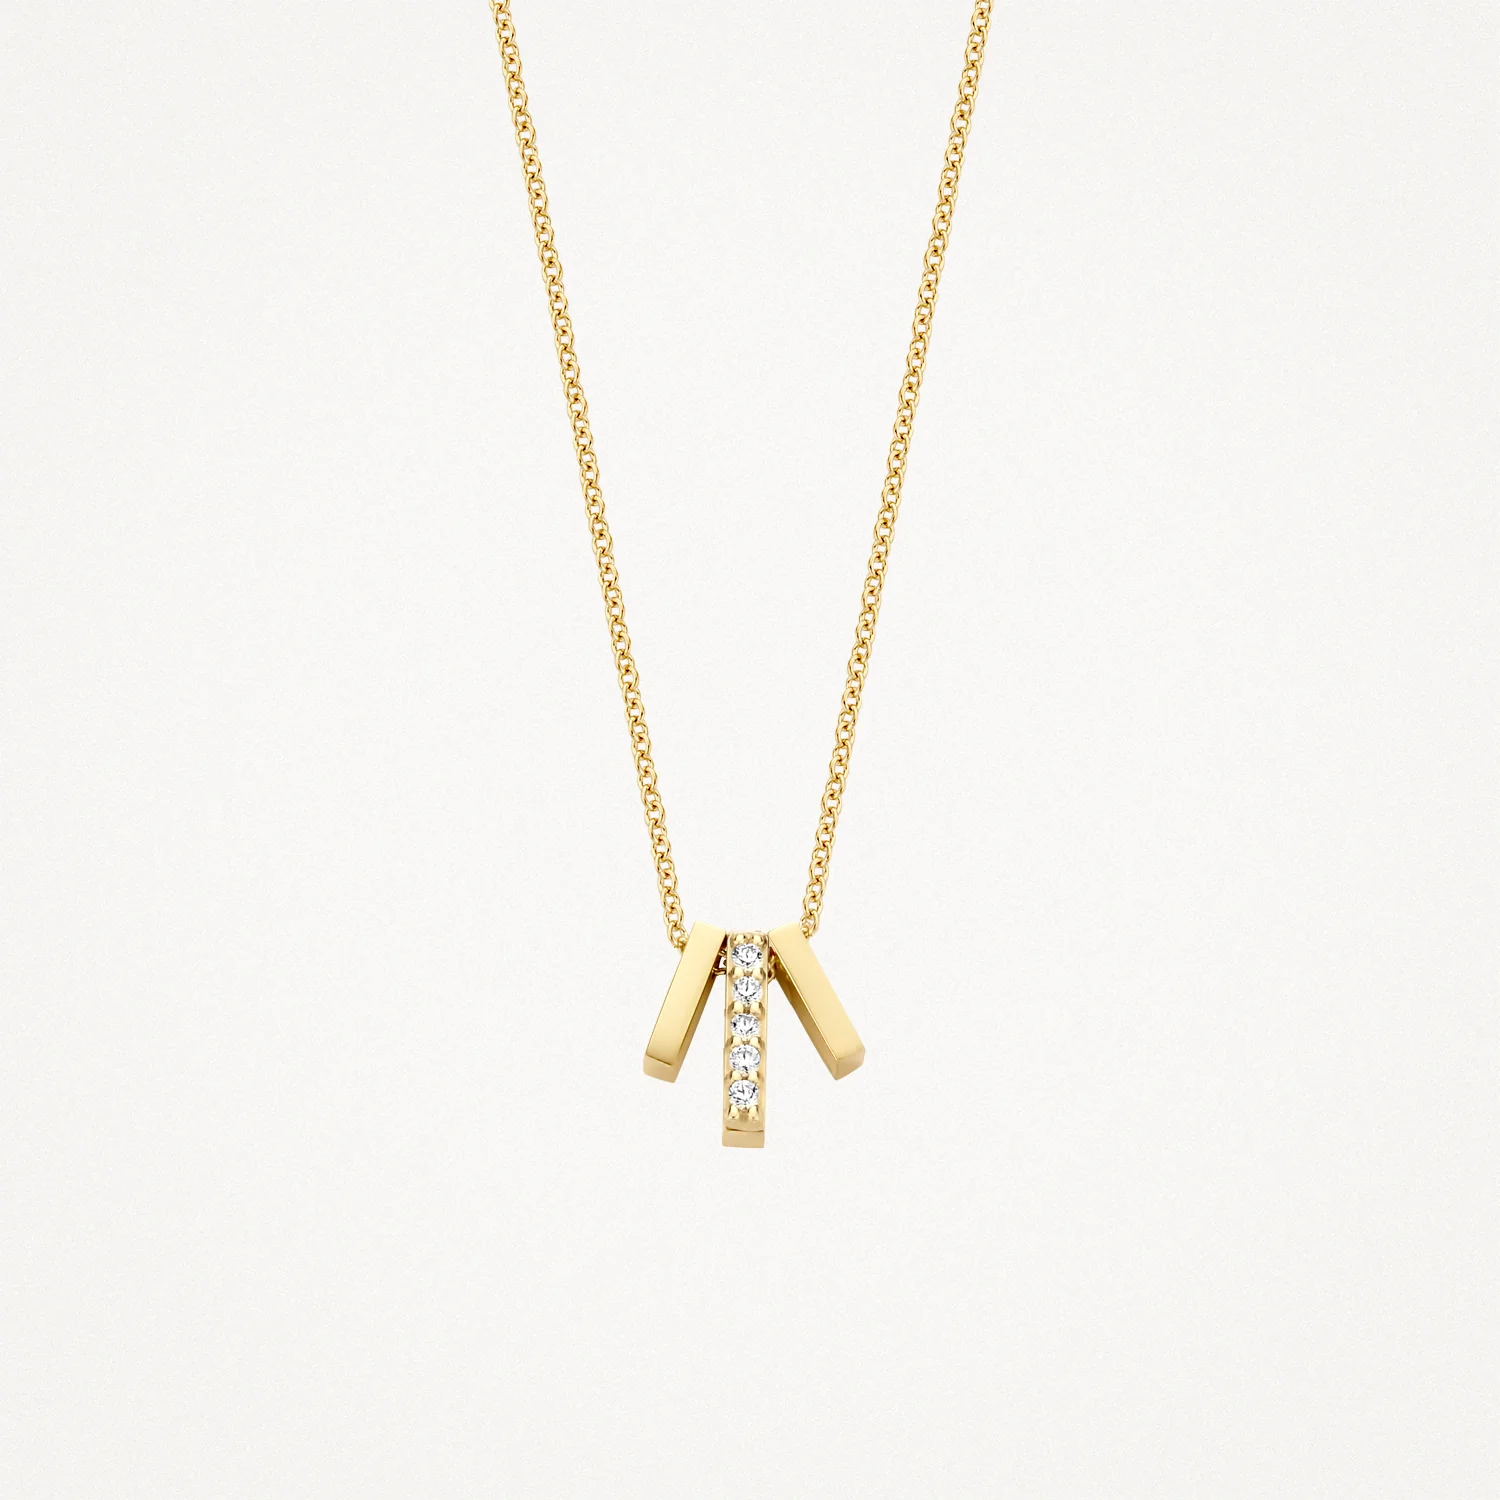 Blush Yellow Gold & CZ 3-Bar Necklace